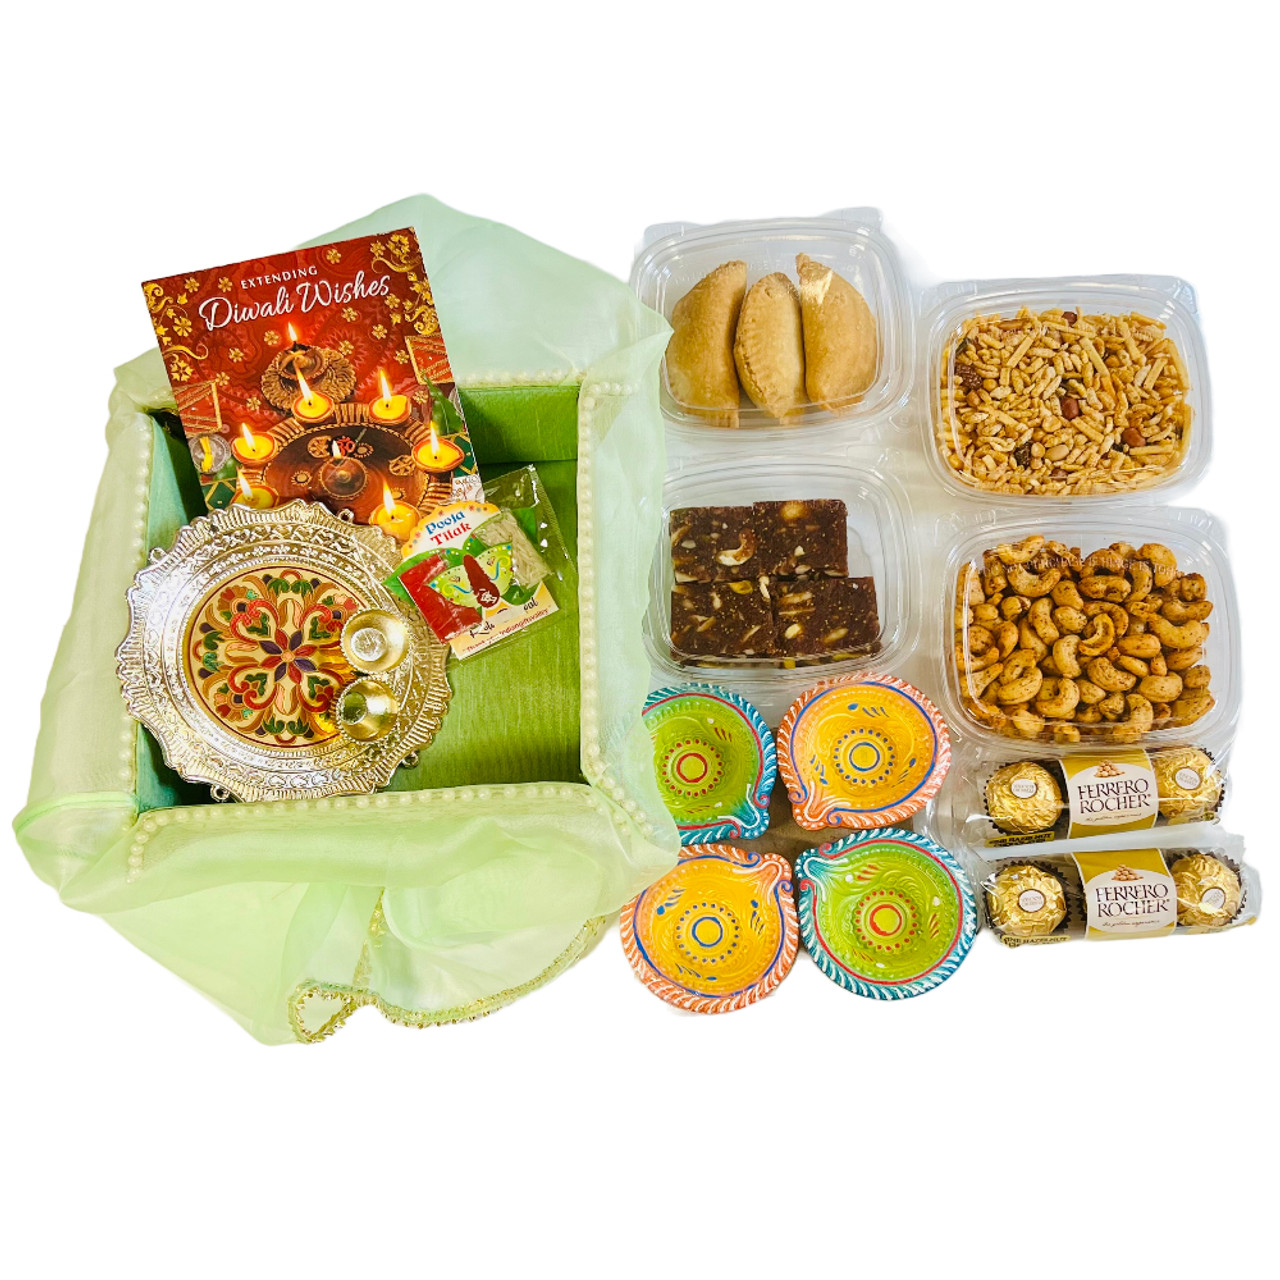 Haldiram's Supreme Joy Diwali Gift Box With Diya (Large) Combo Price in  India - Buy Haldiram's Supreme Joy Diwali Gift Box With Diya (Large) Combo  online at Flipkart.com